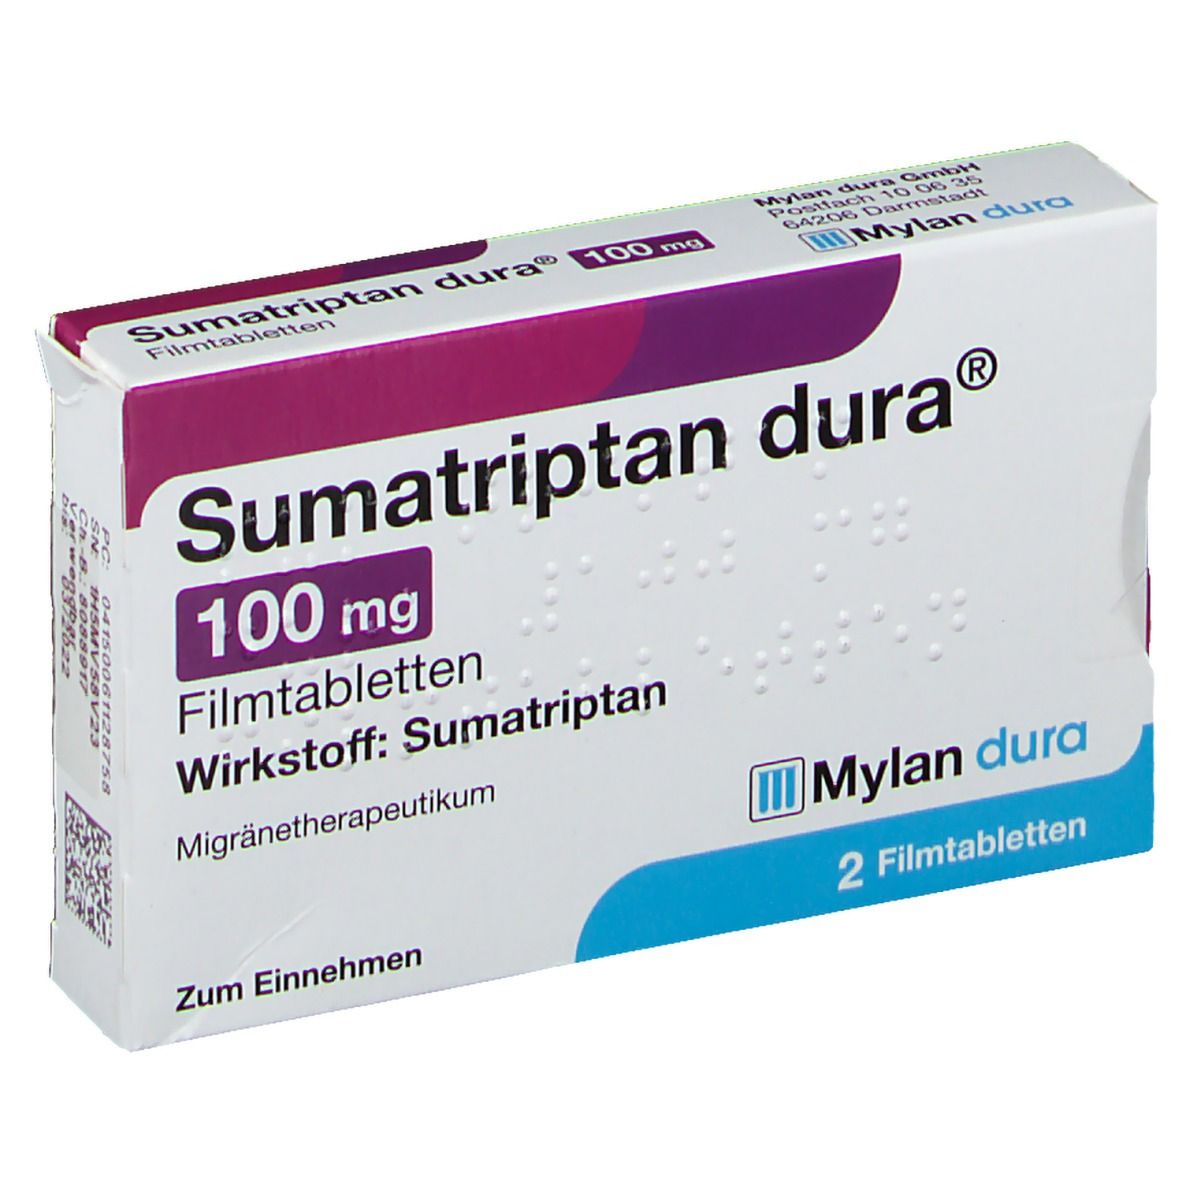 Sumatriptan dura® 100 mg